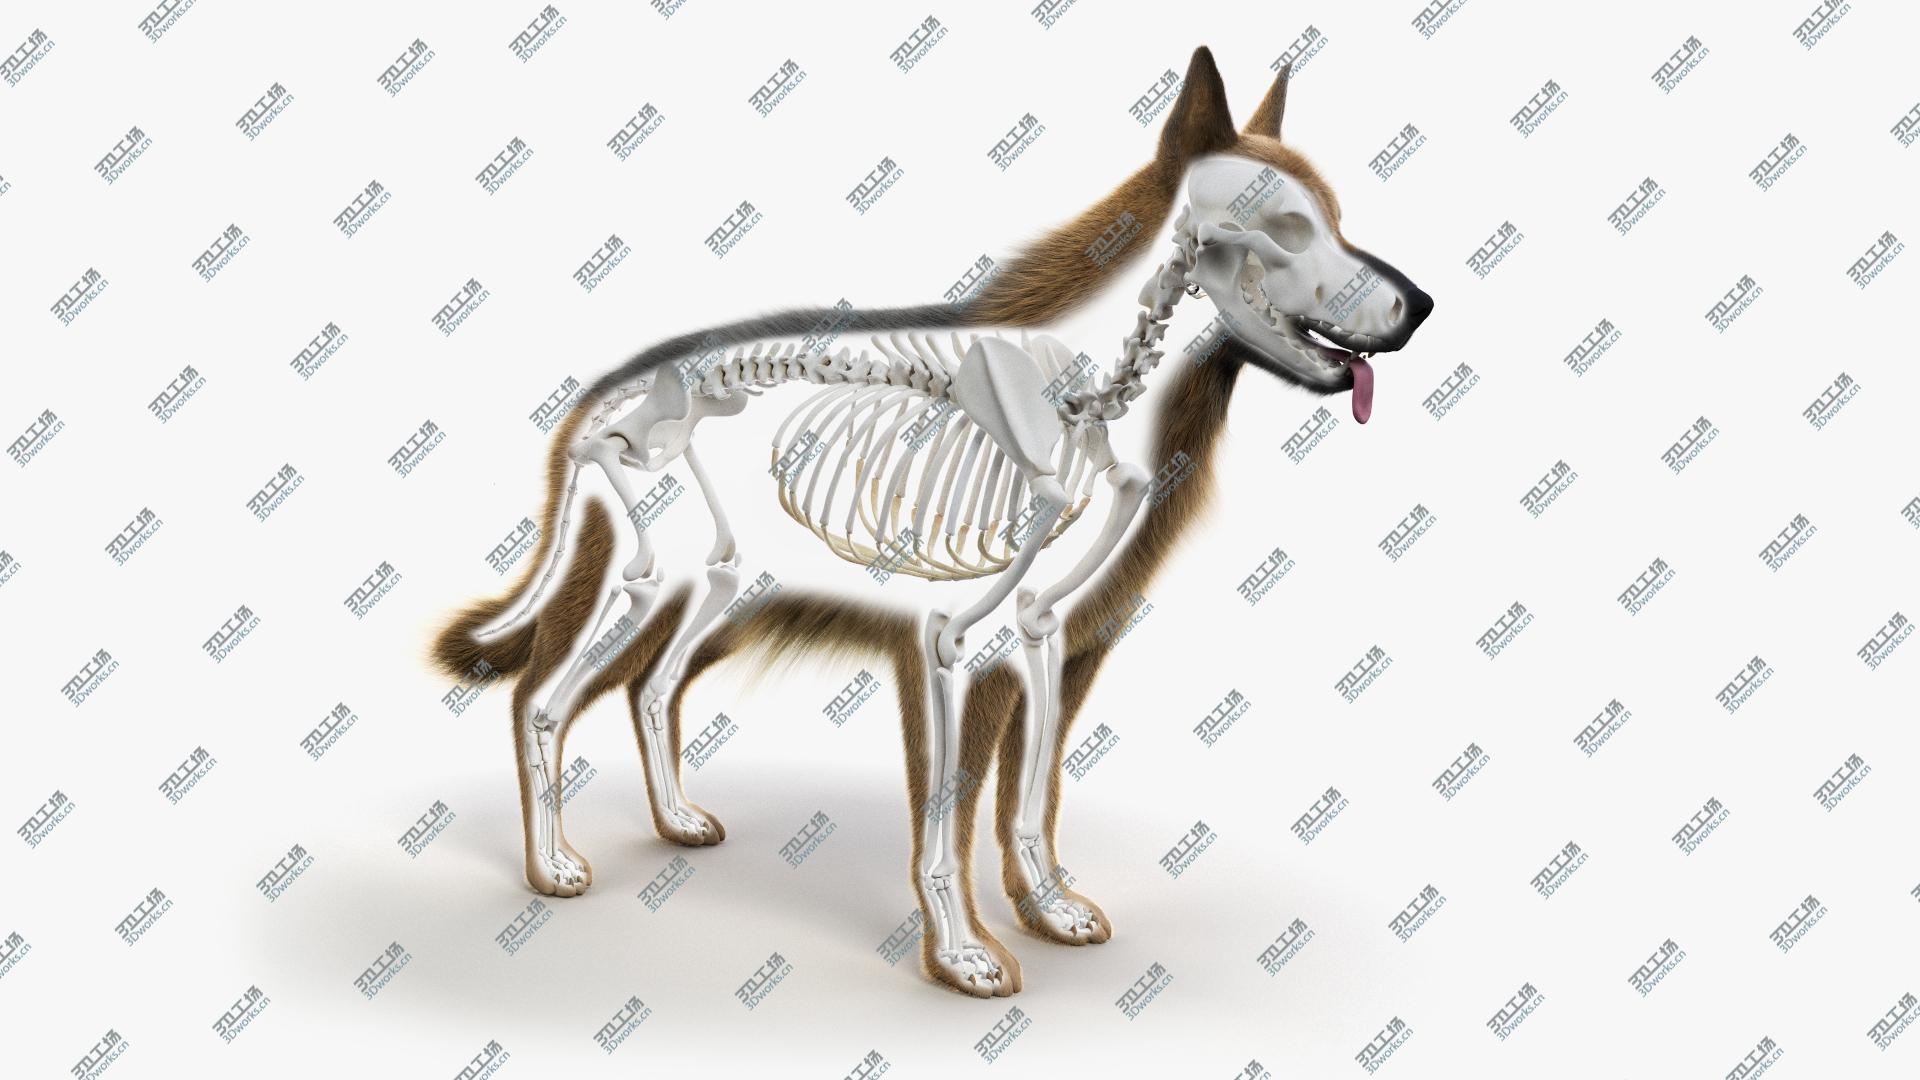 images/goods_img/202105071/Dog Skin And Skeleton Animated model/3.jpg